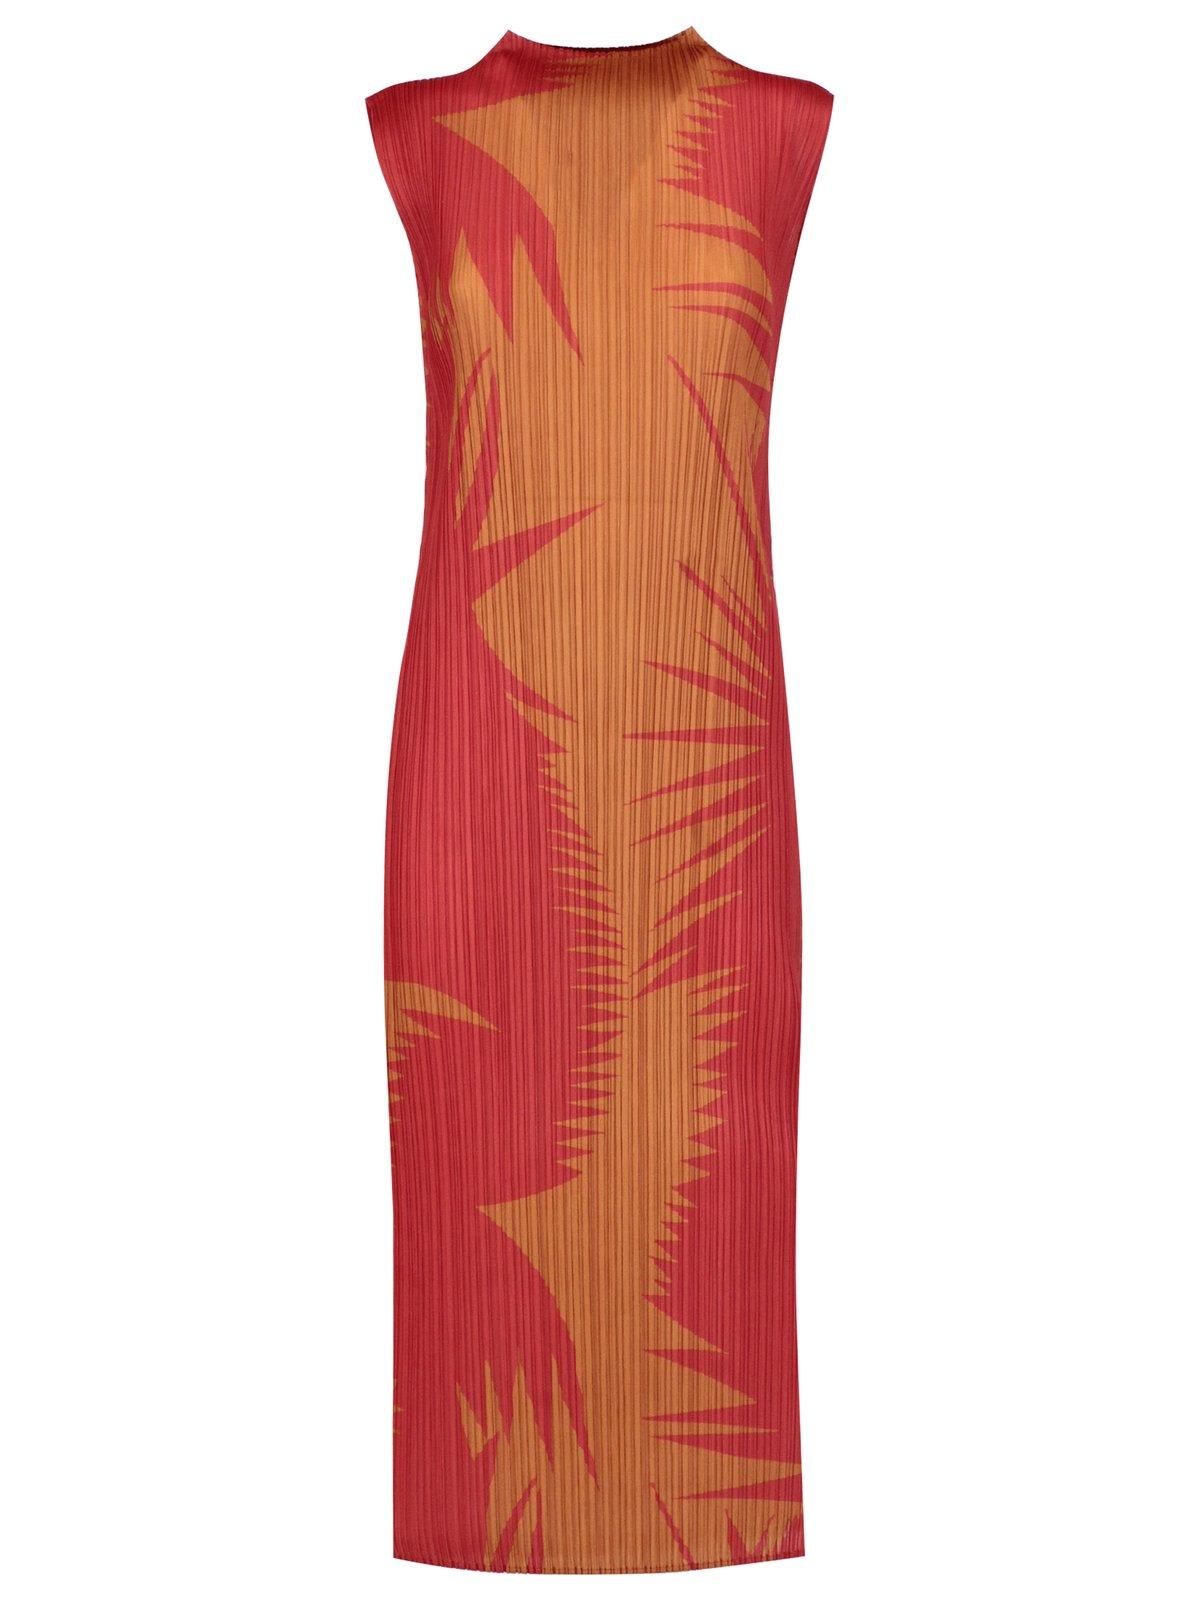 Graphic Printed Sleeveless Dress